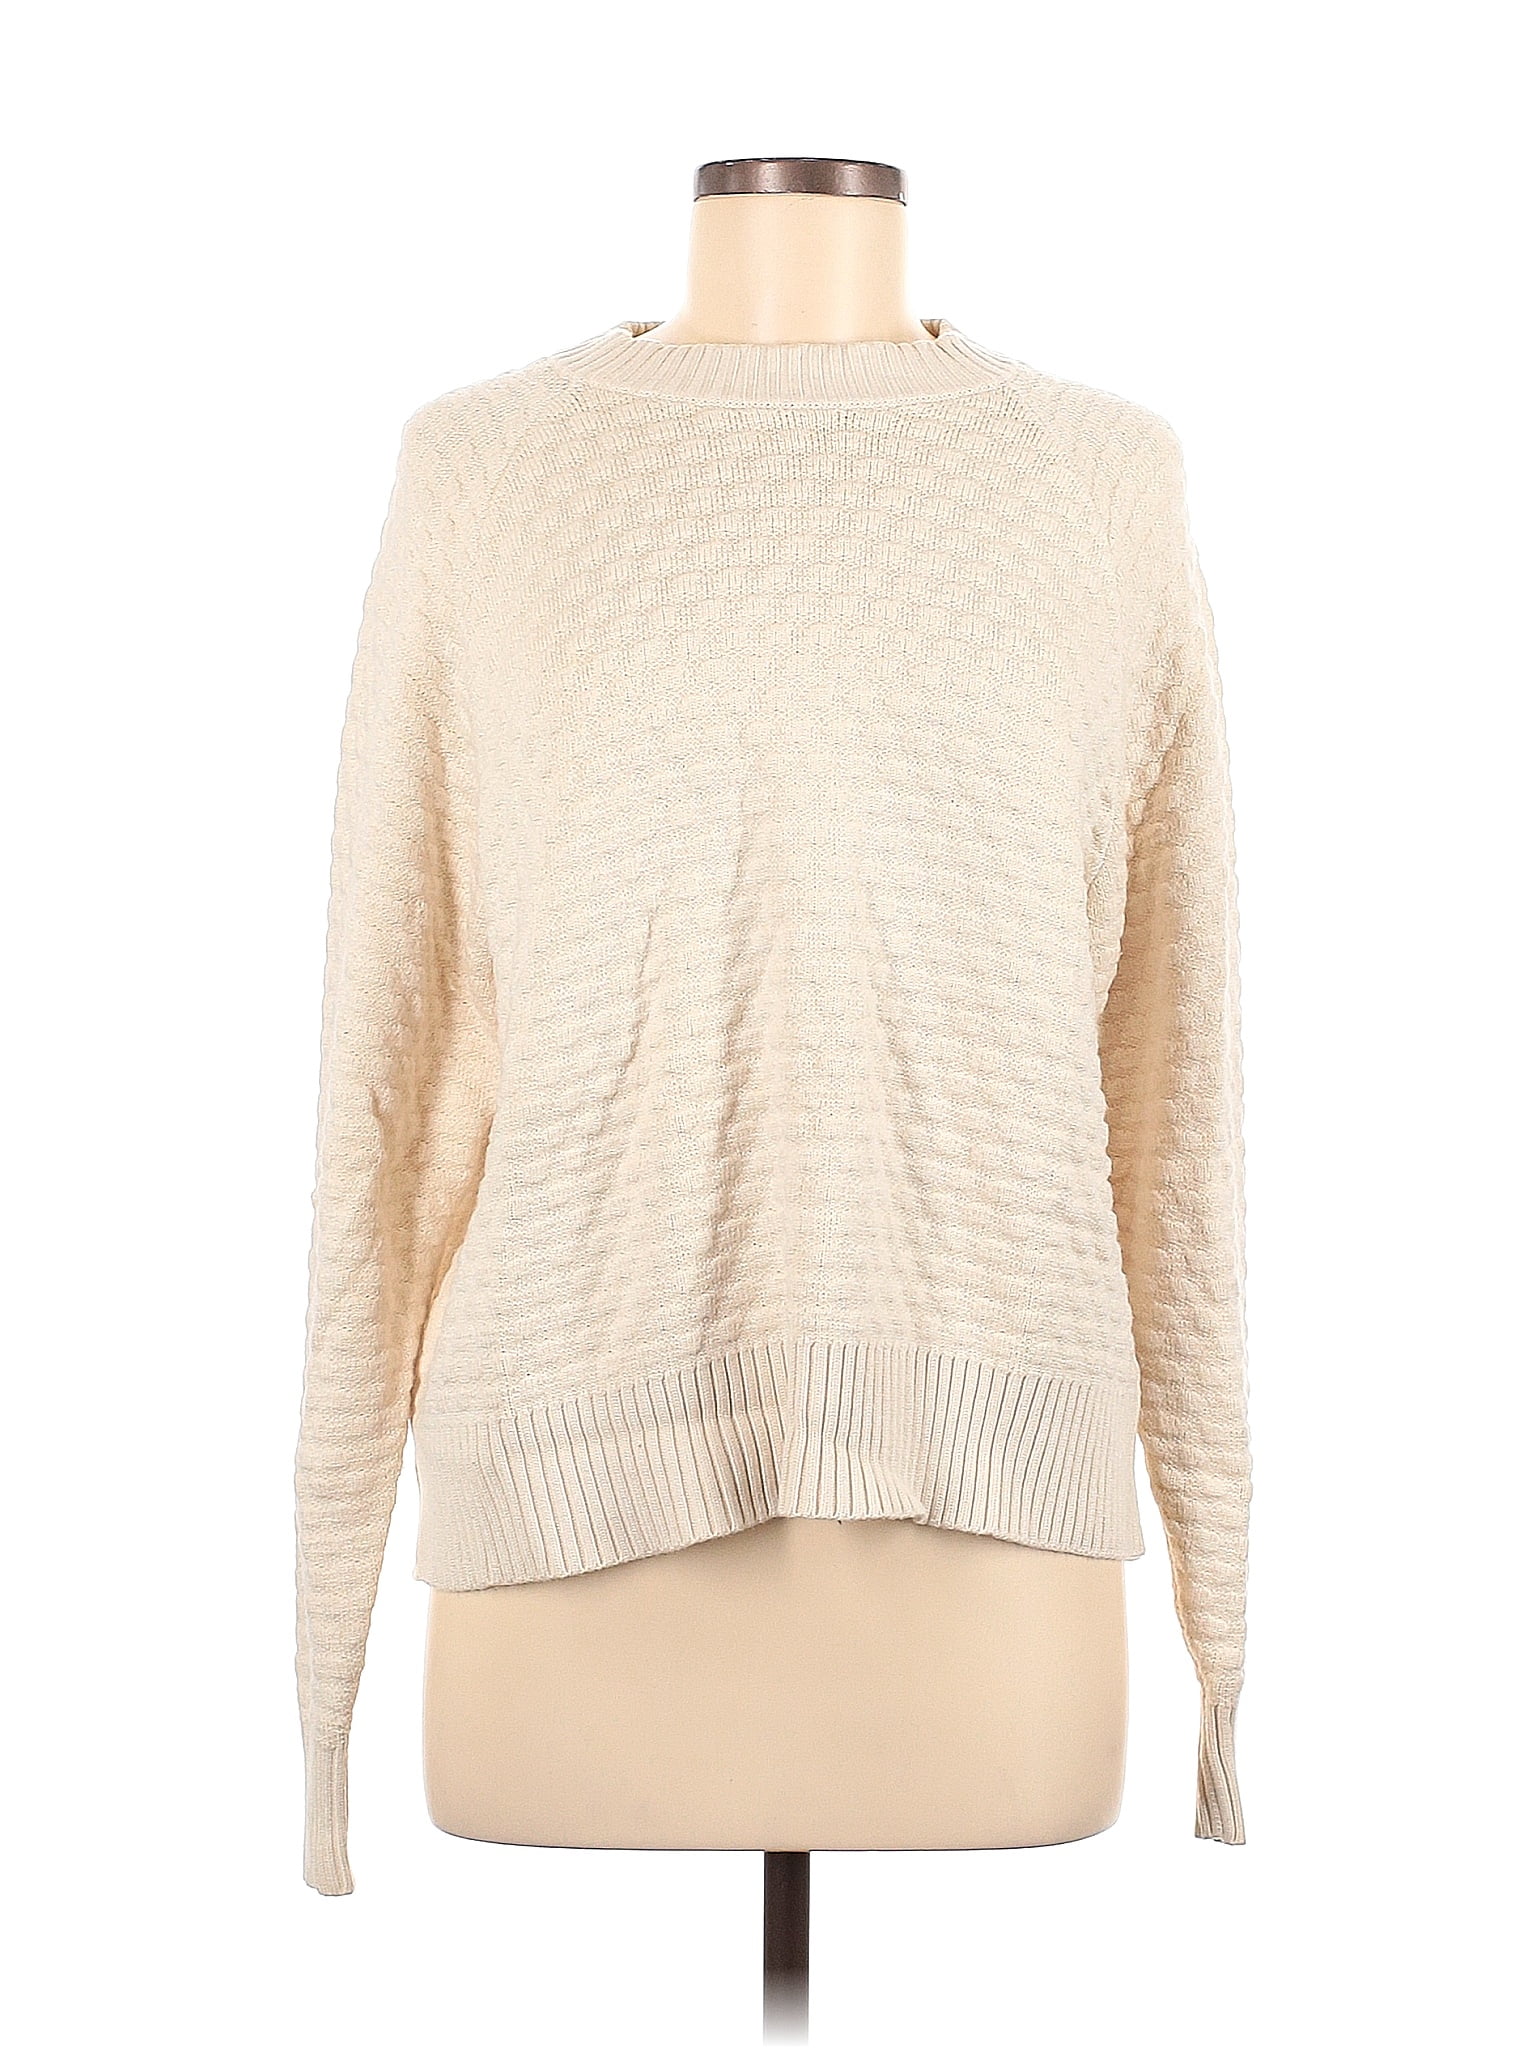 Lululemon Athletica Color Block Solid Ivory Pullover Sweater Size Med ...